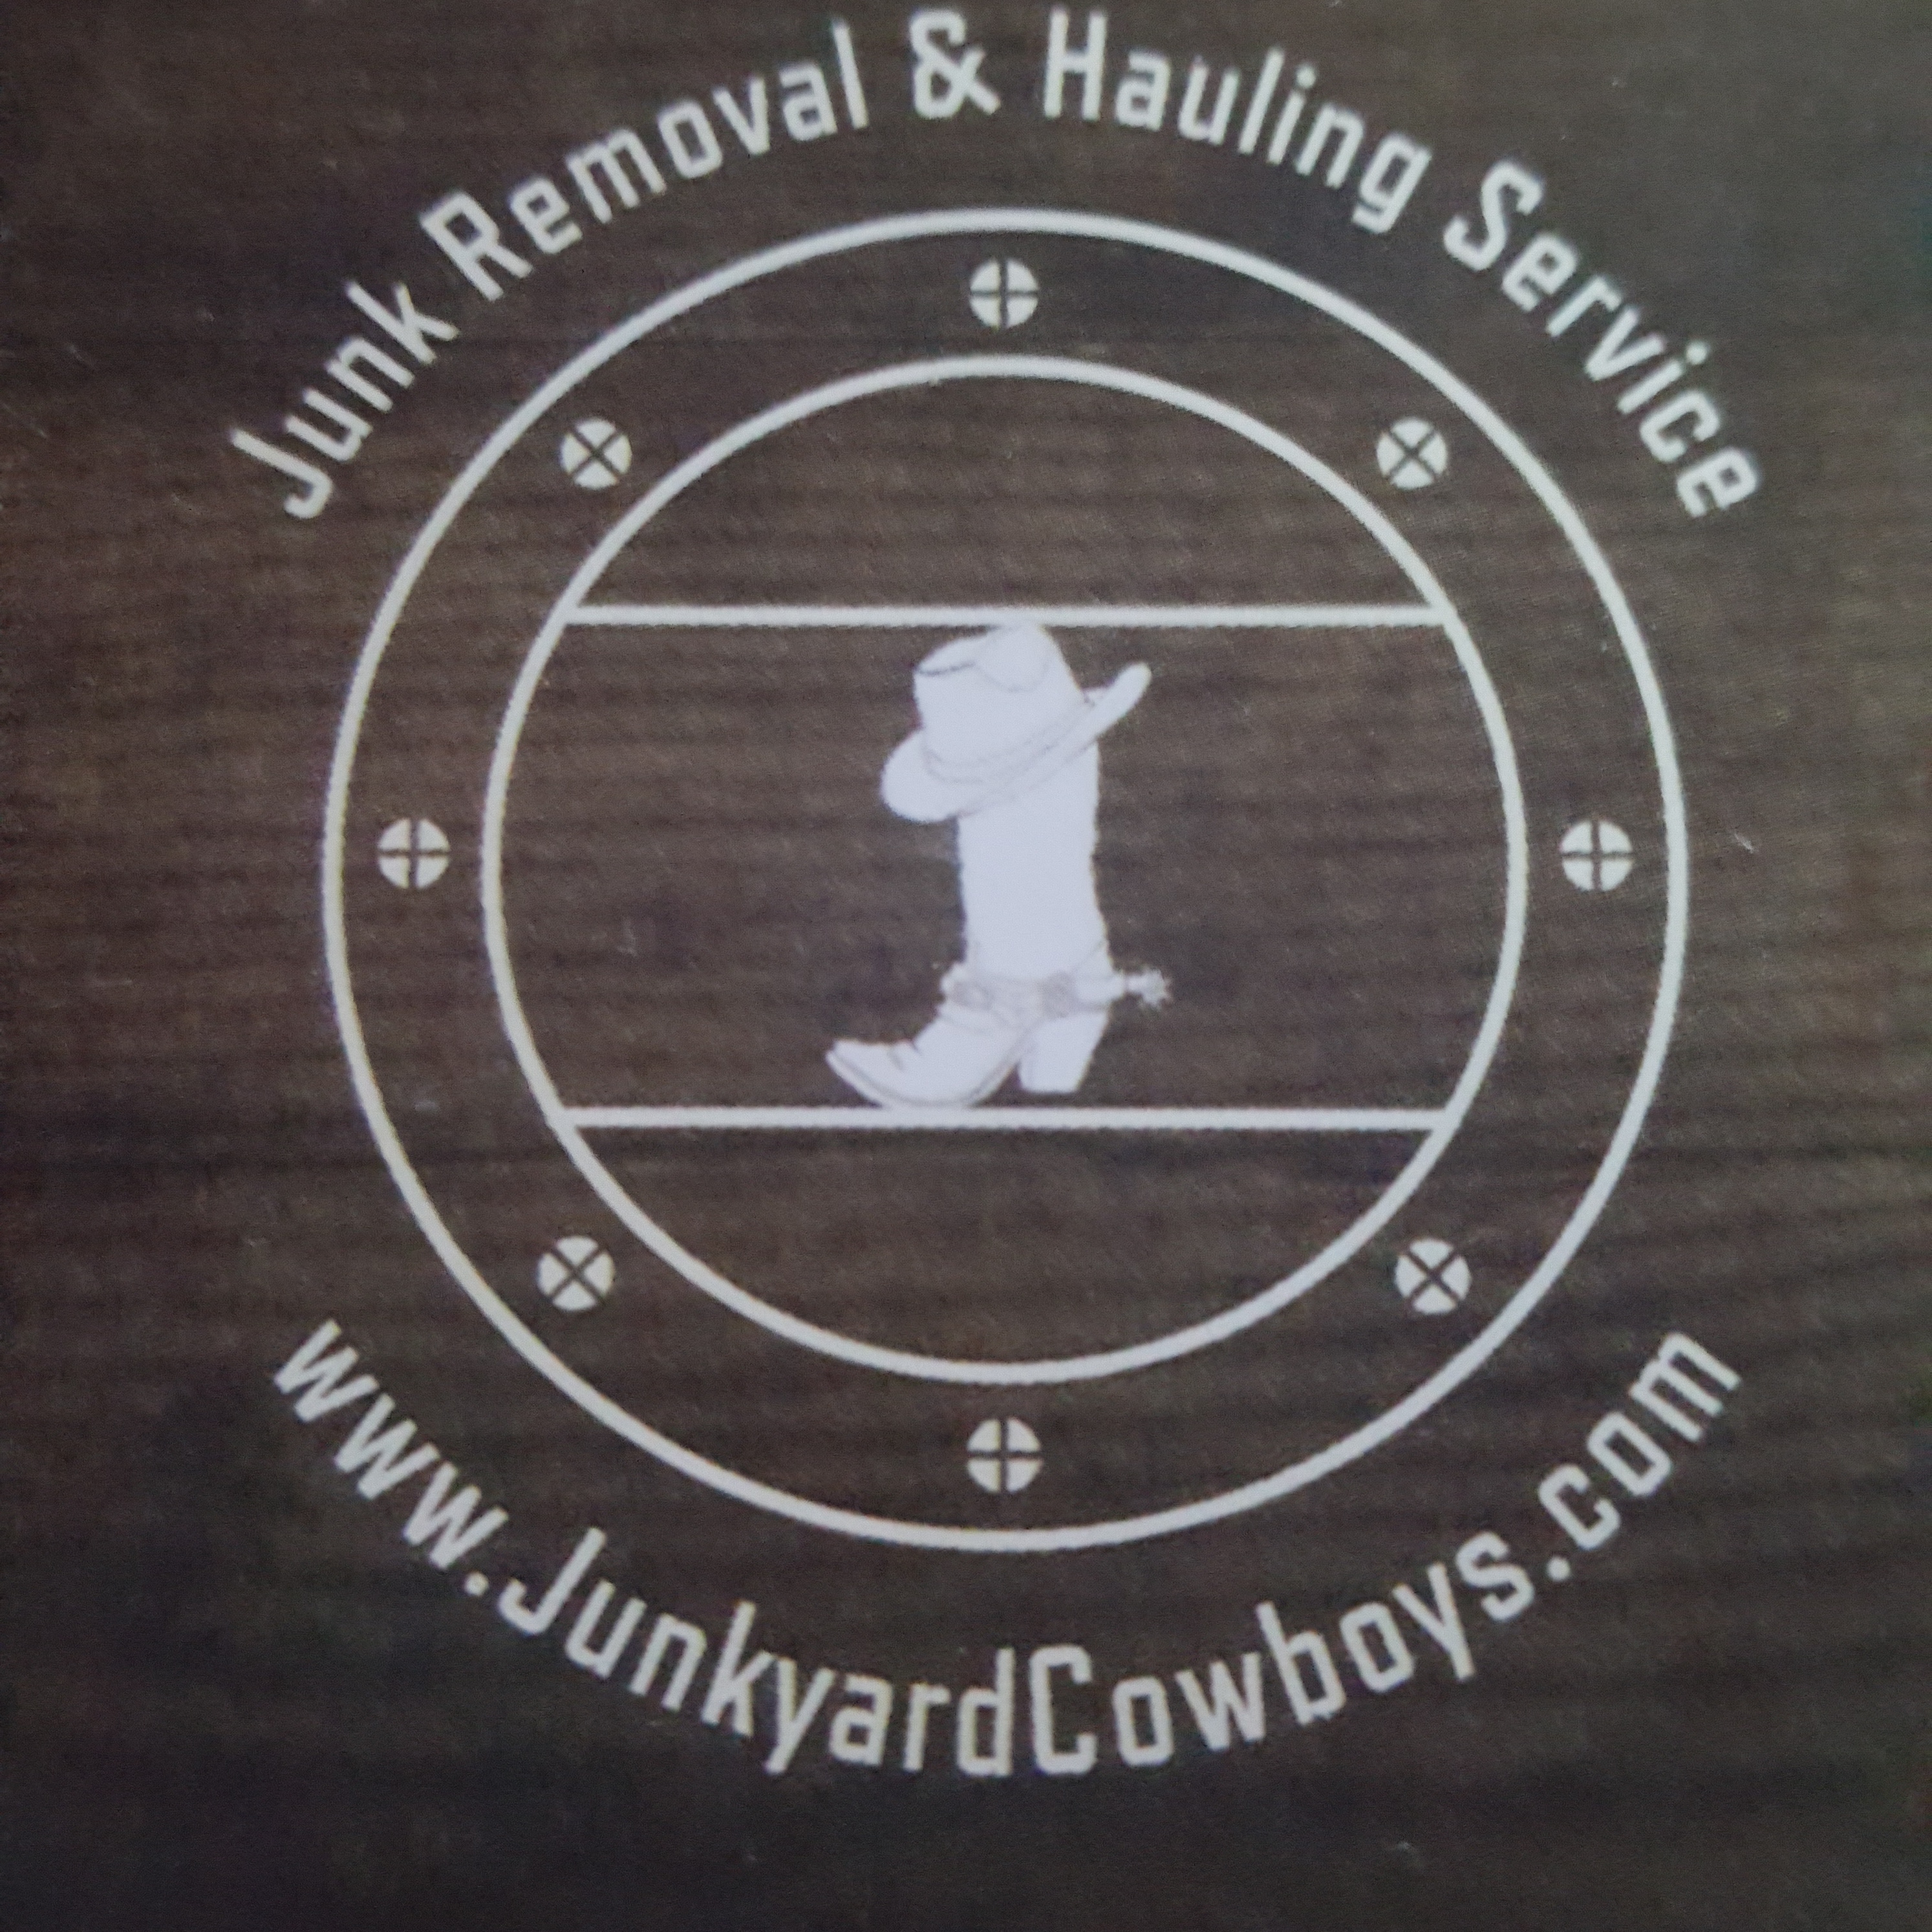 Junkyard Cowboys Logo